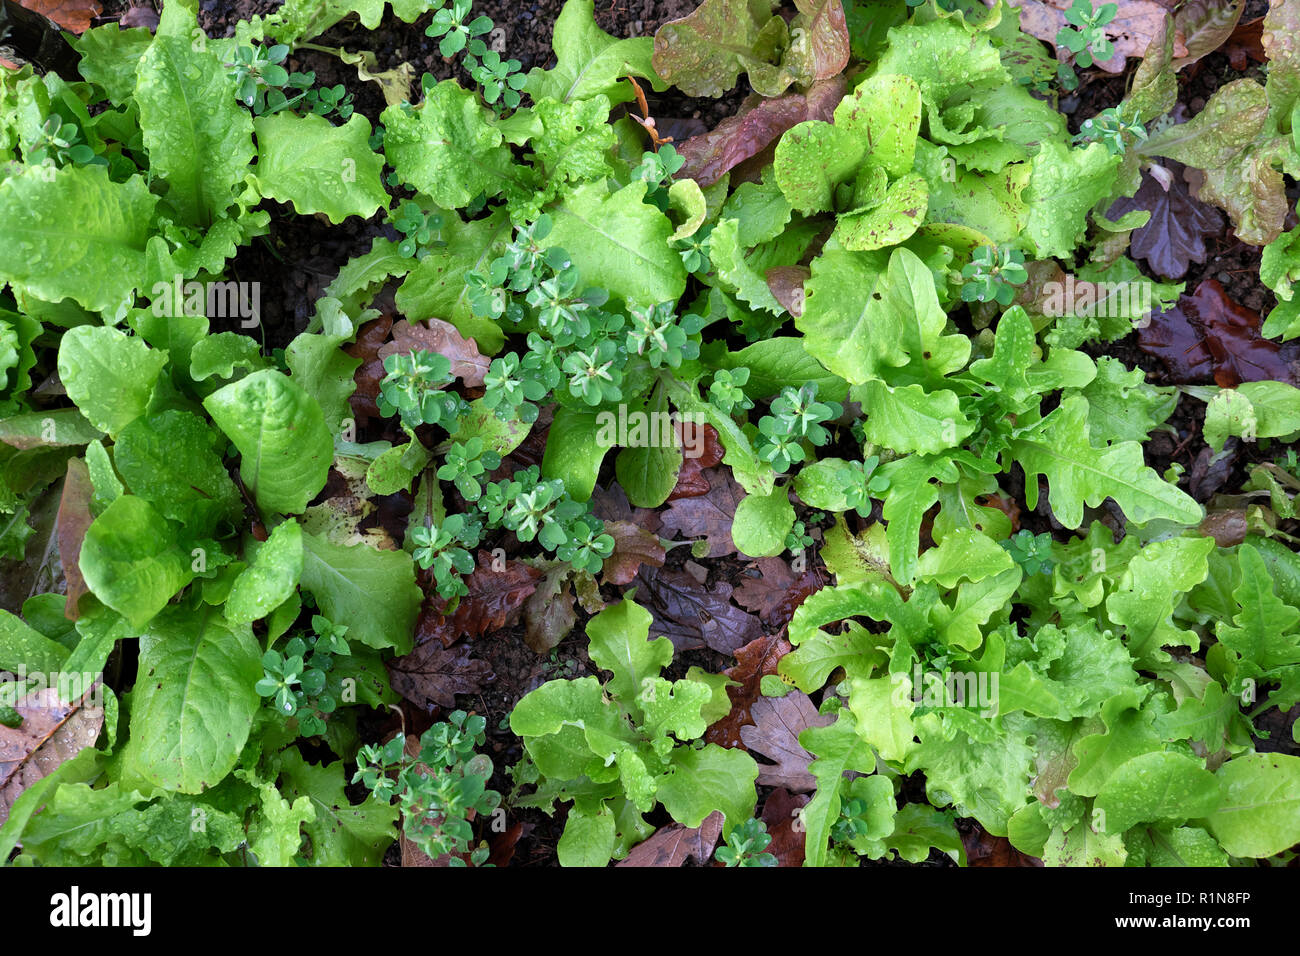 Winter lettuce seedlings growing in a vegetable garden plot in November in rural Wales UK  KATHY DEWITT Stock Photo